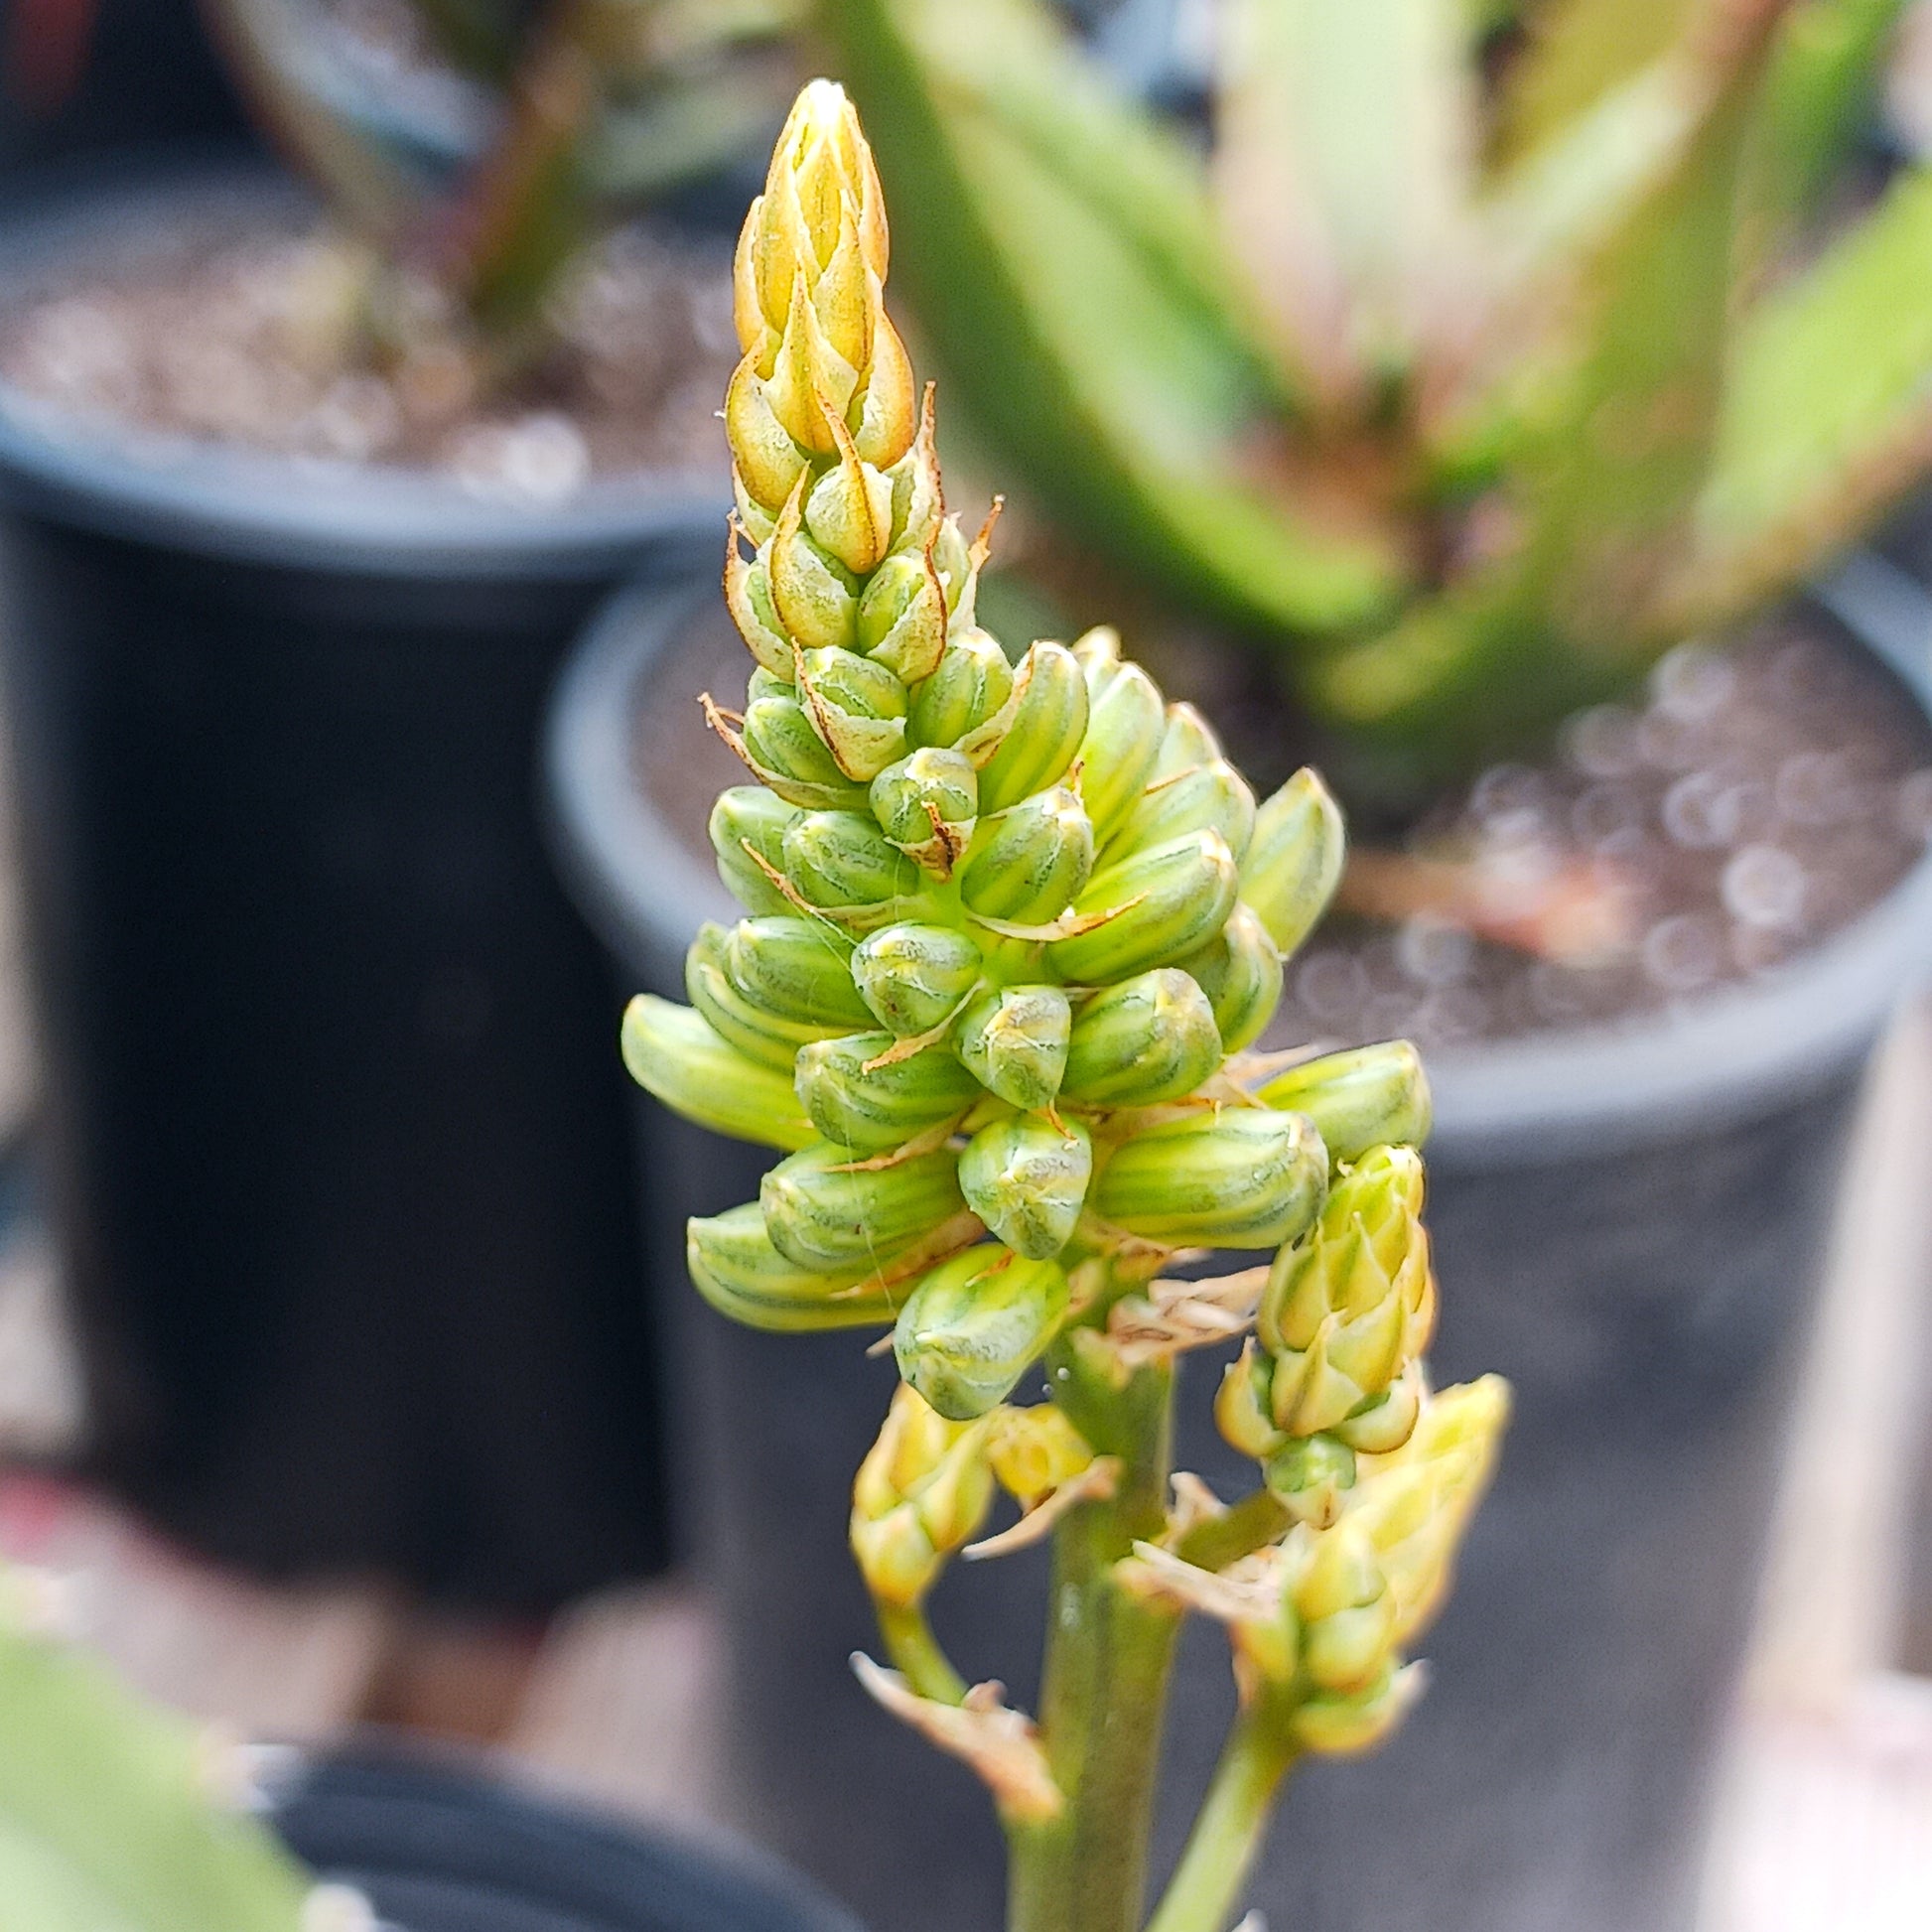 Aloe "Verity Nice" unopened flower bud